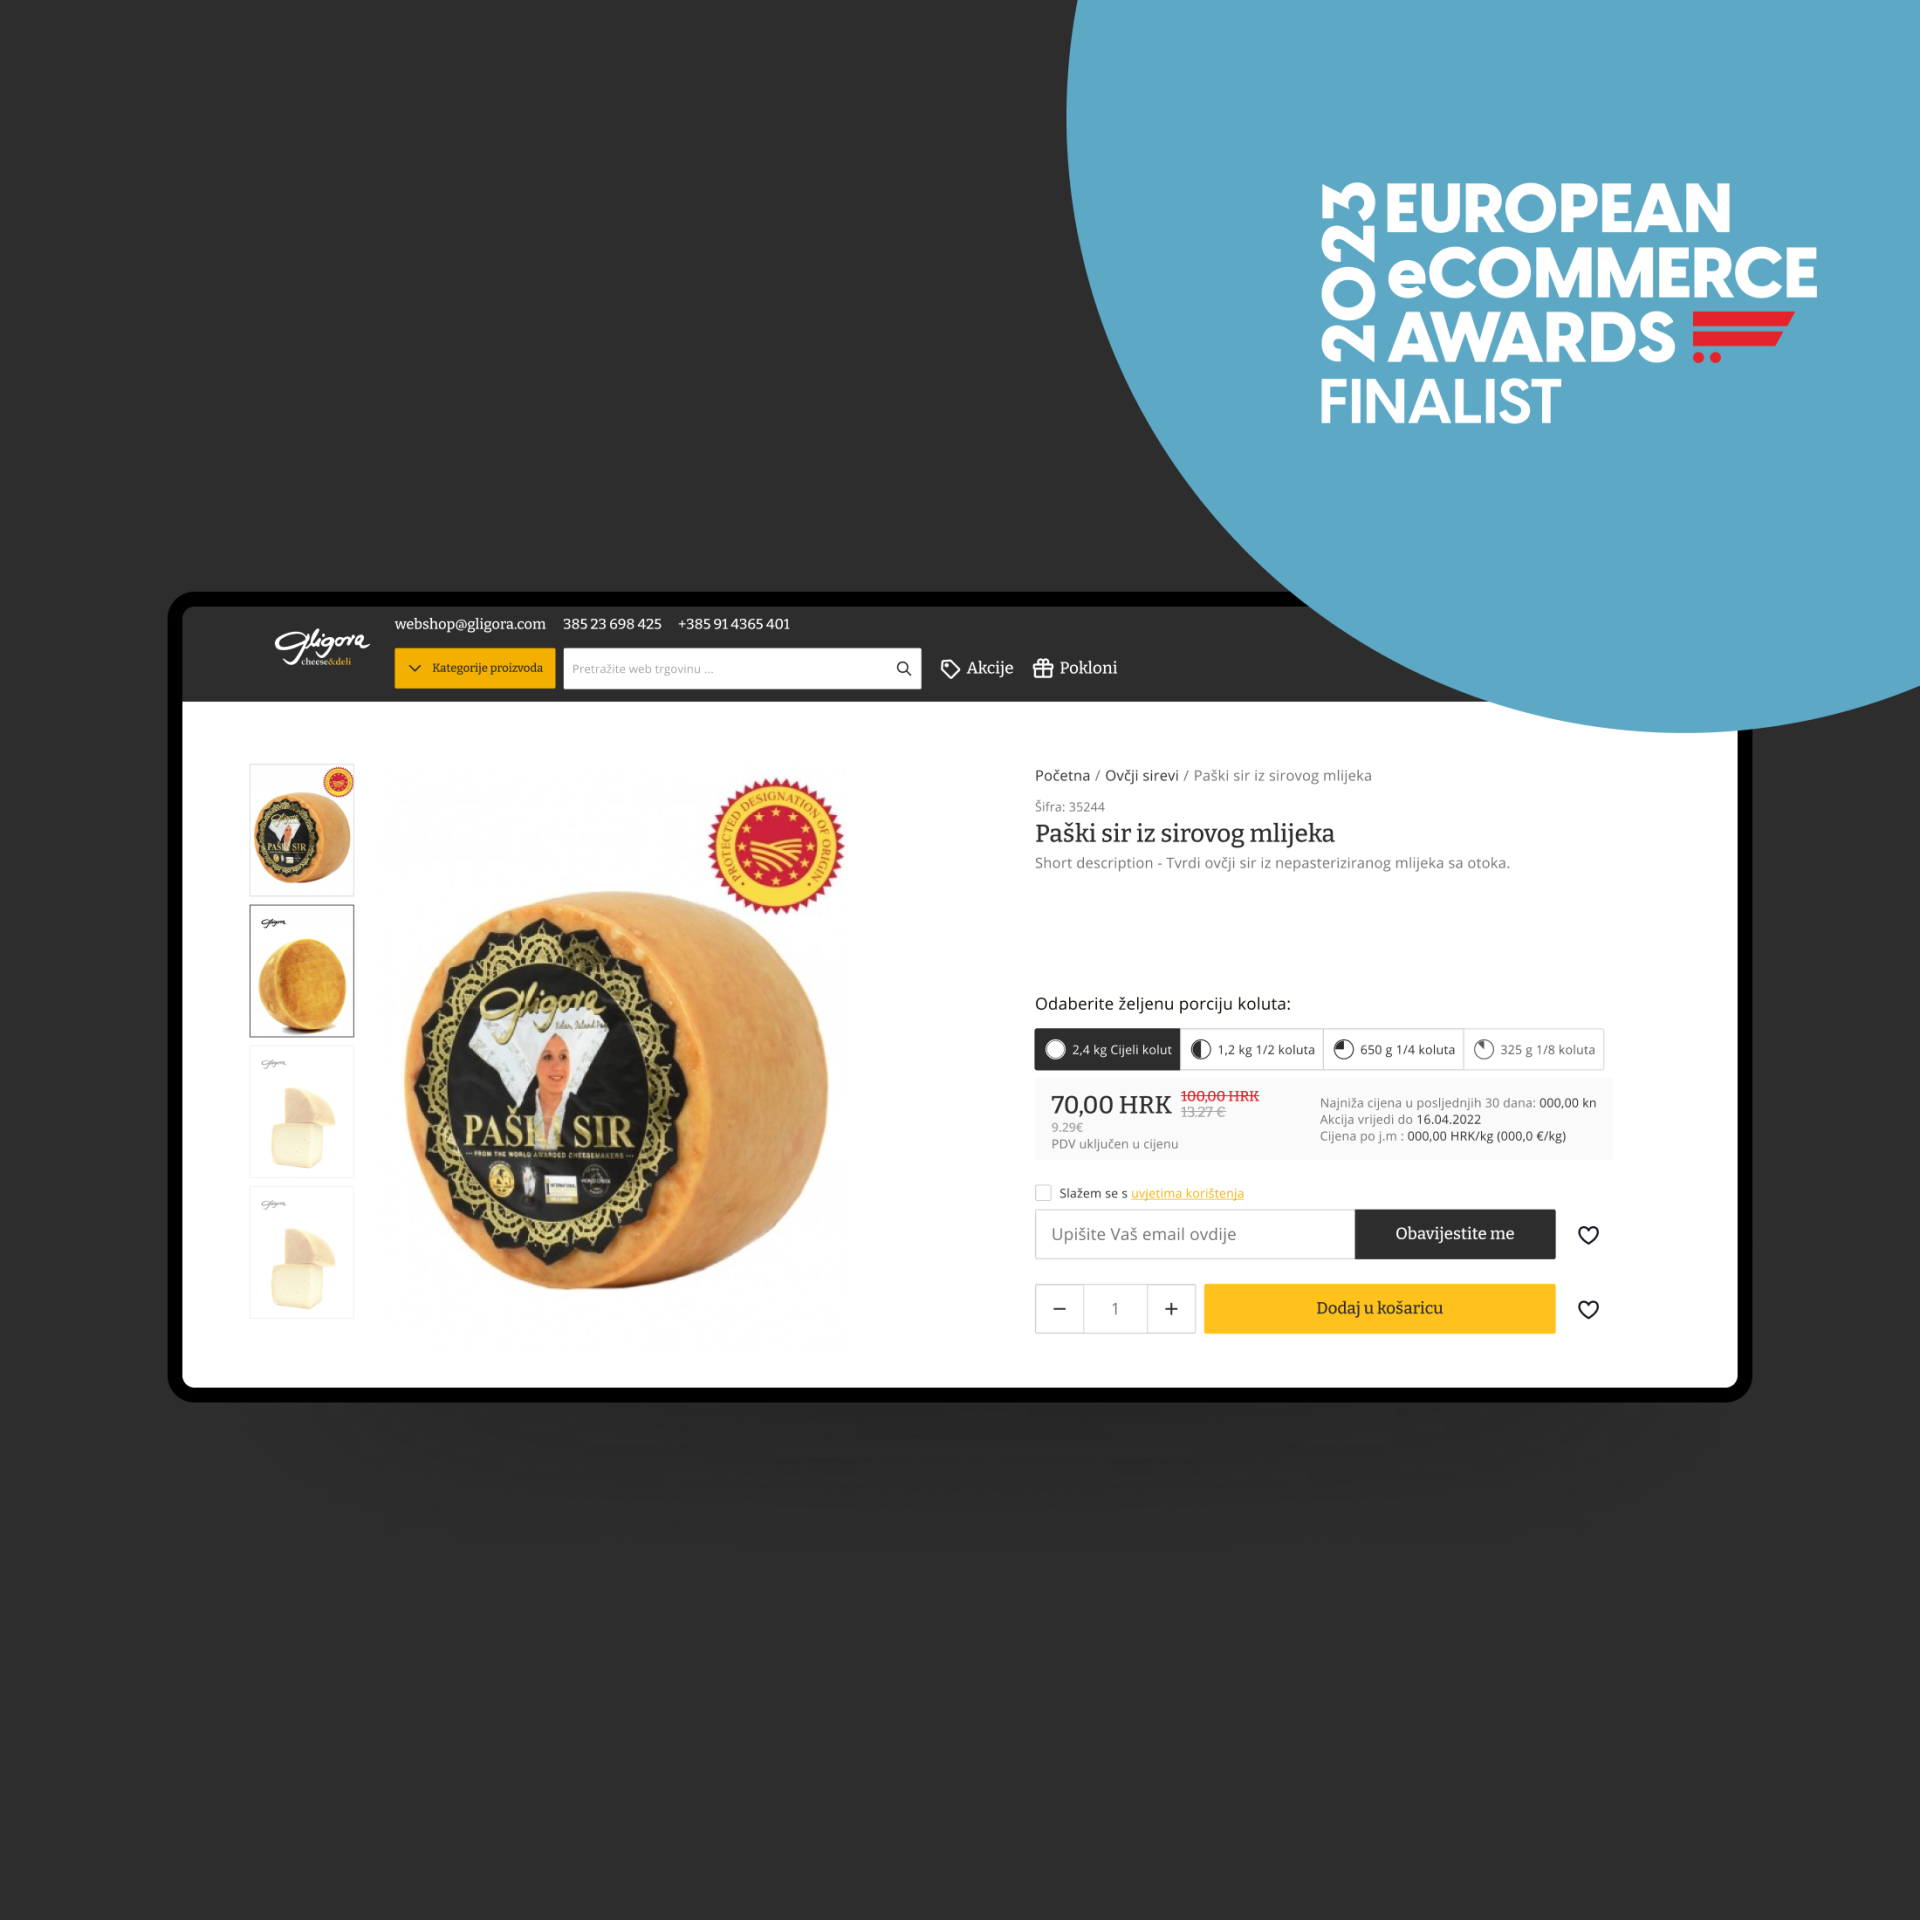 Winning Performance in European eCommerce Awards